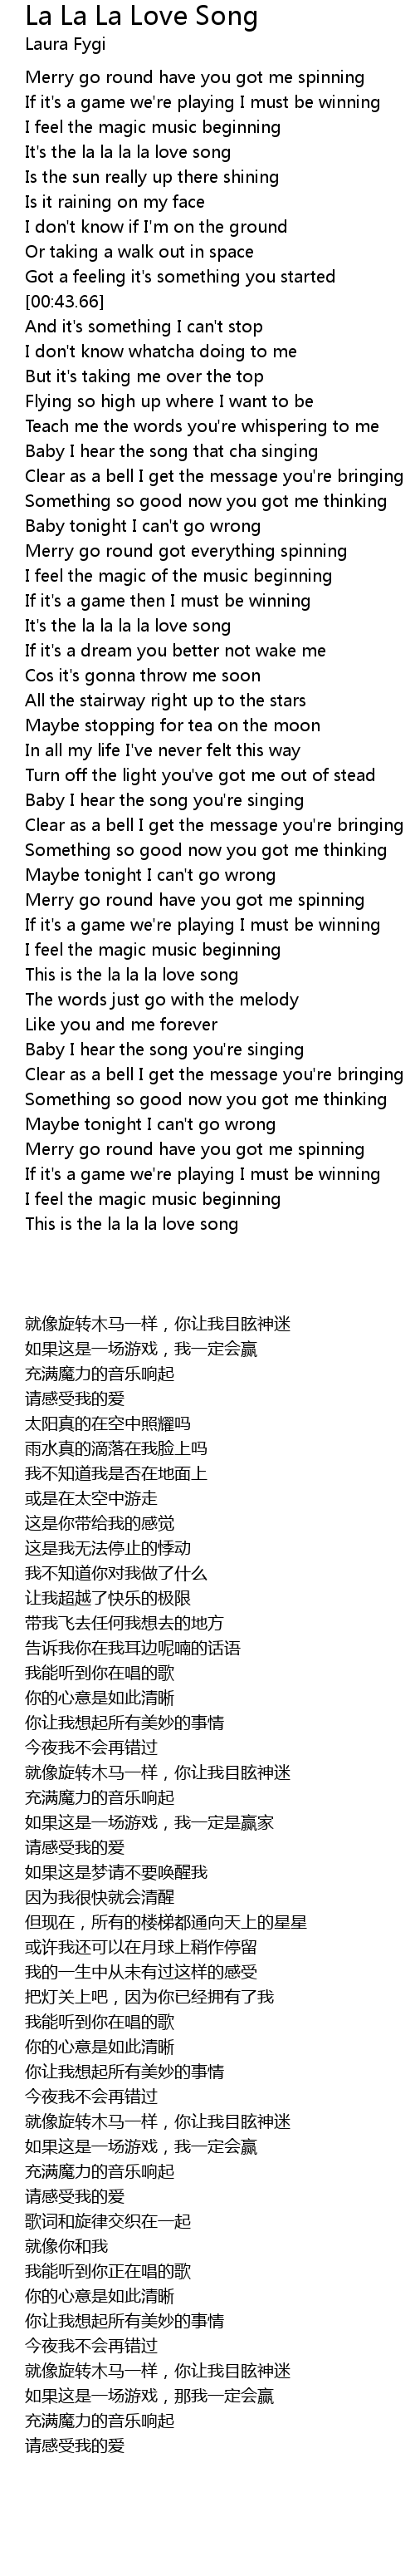 La La La Love Song Lyrics Follow Lyrics Bbno$ & y2k] did i really just forget that melody? la la la love song lyrics follow lyrics